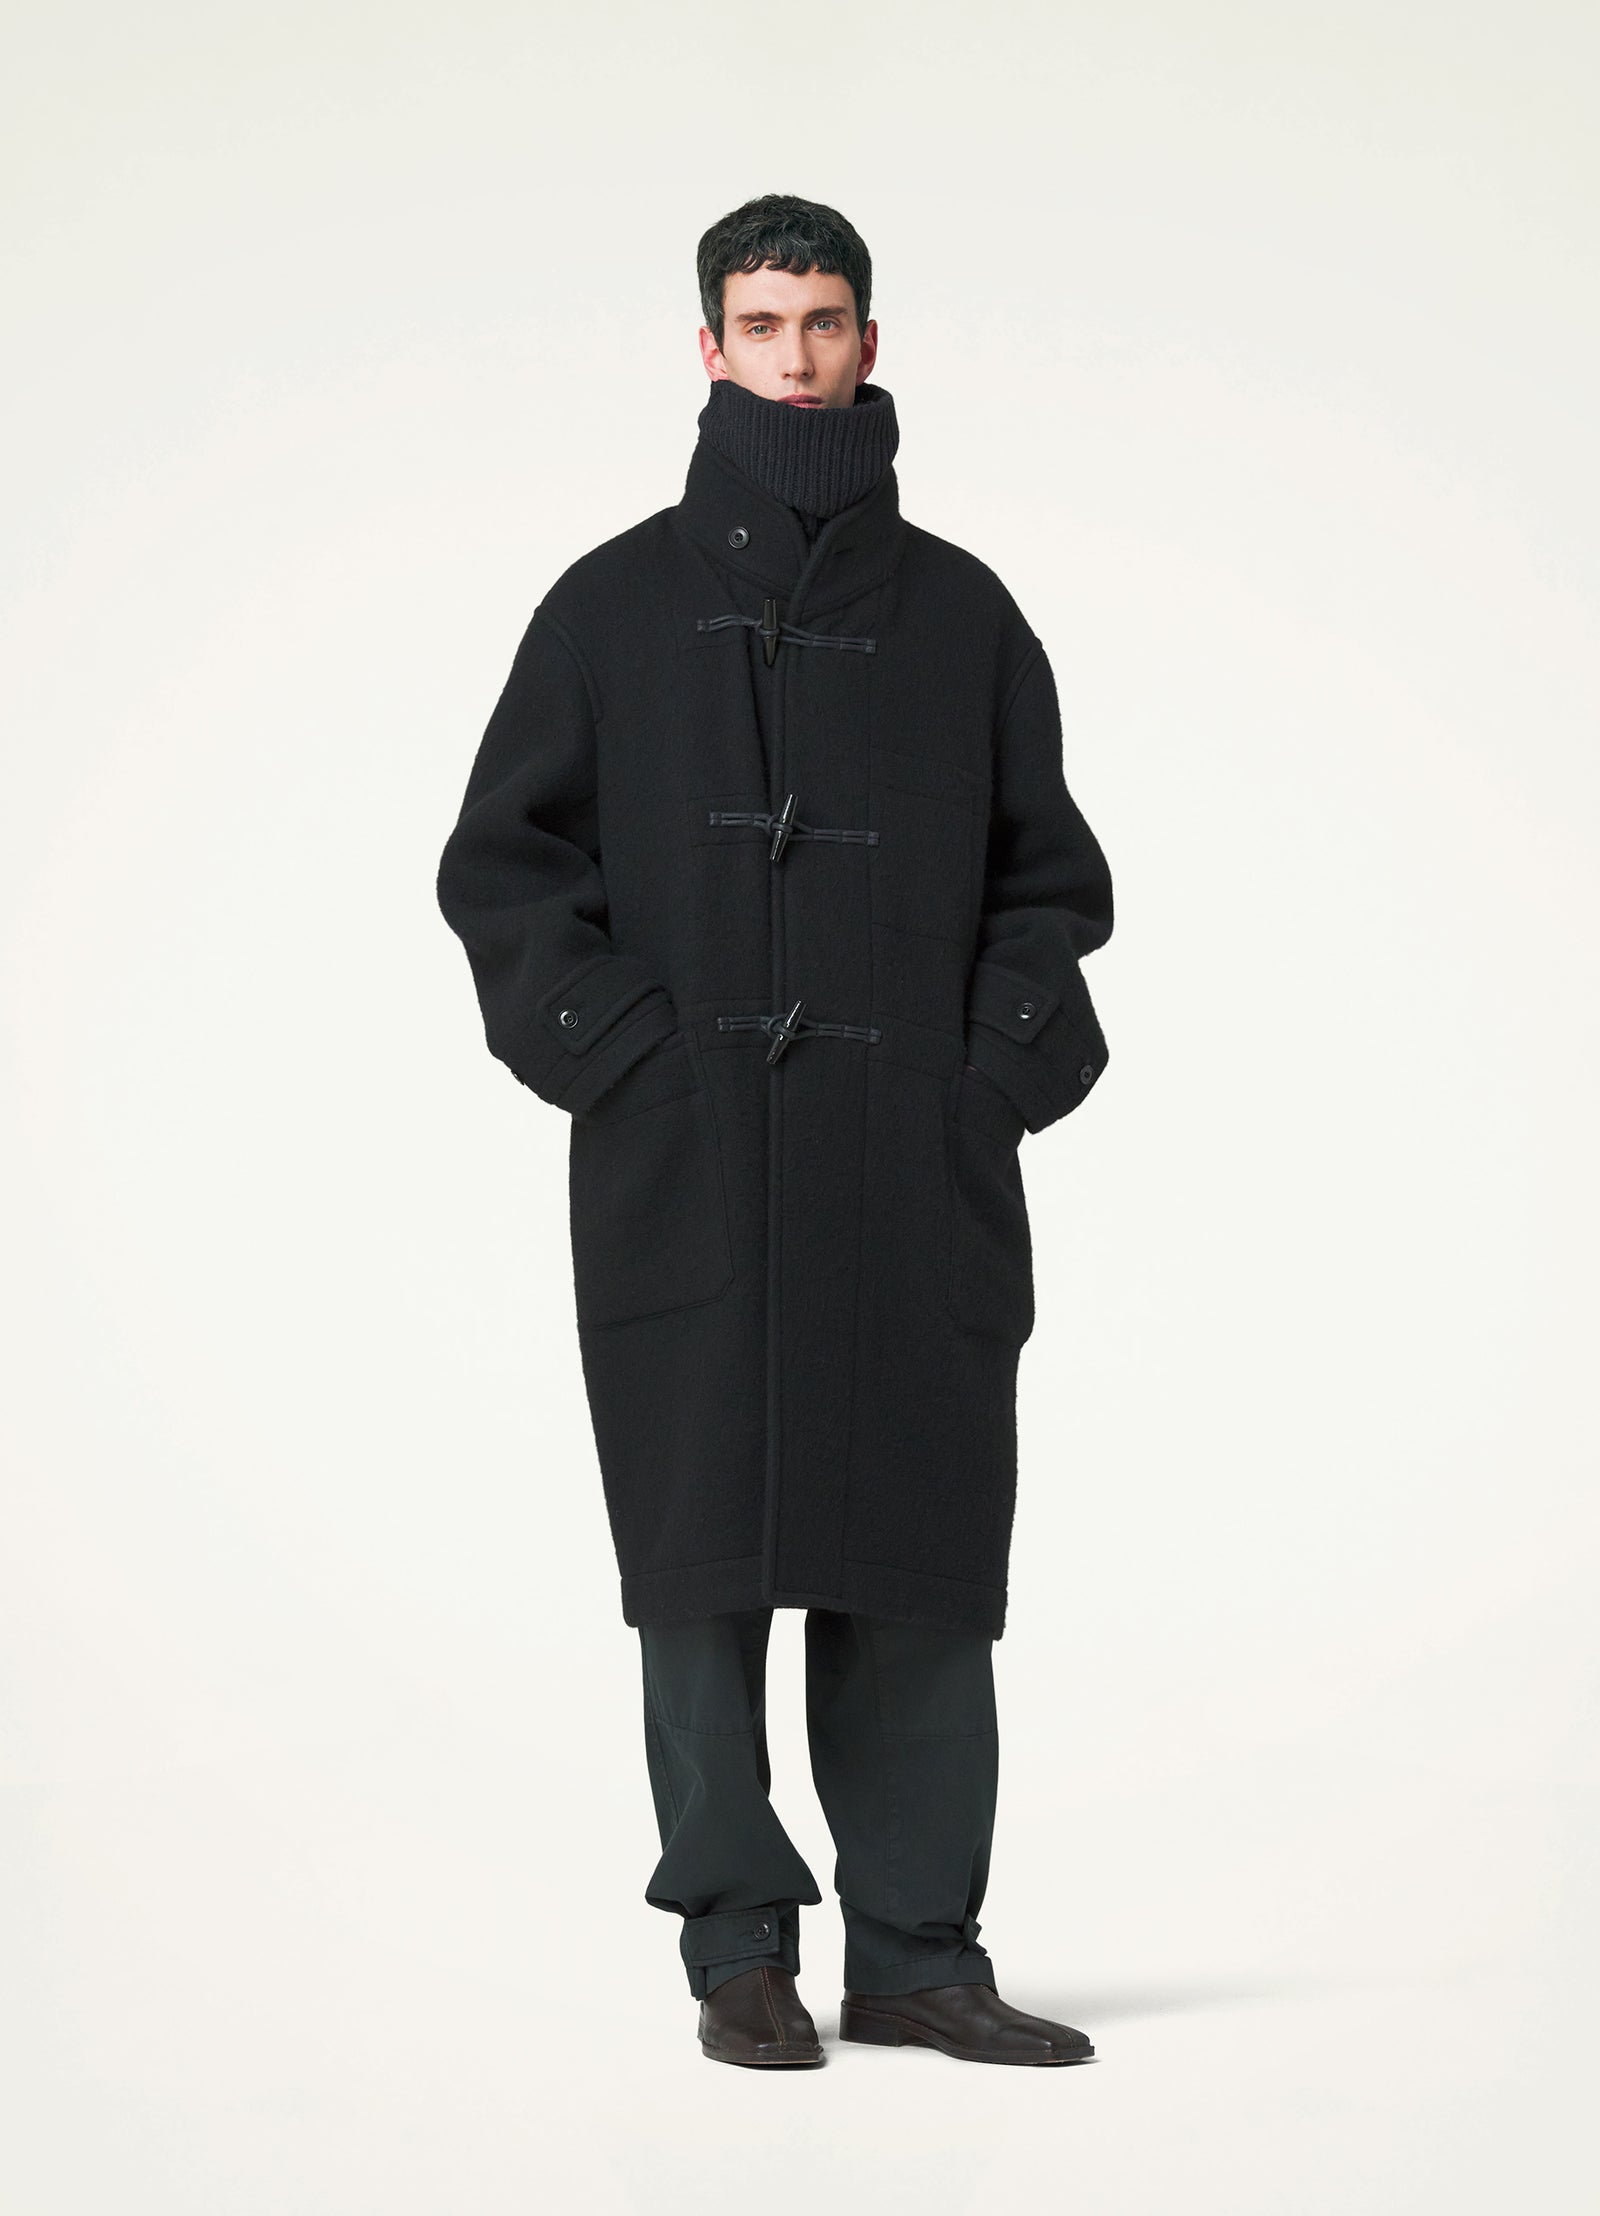 Designer Coats For Men